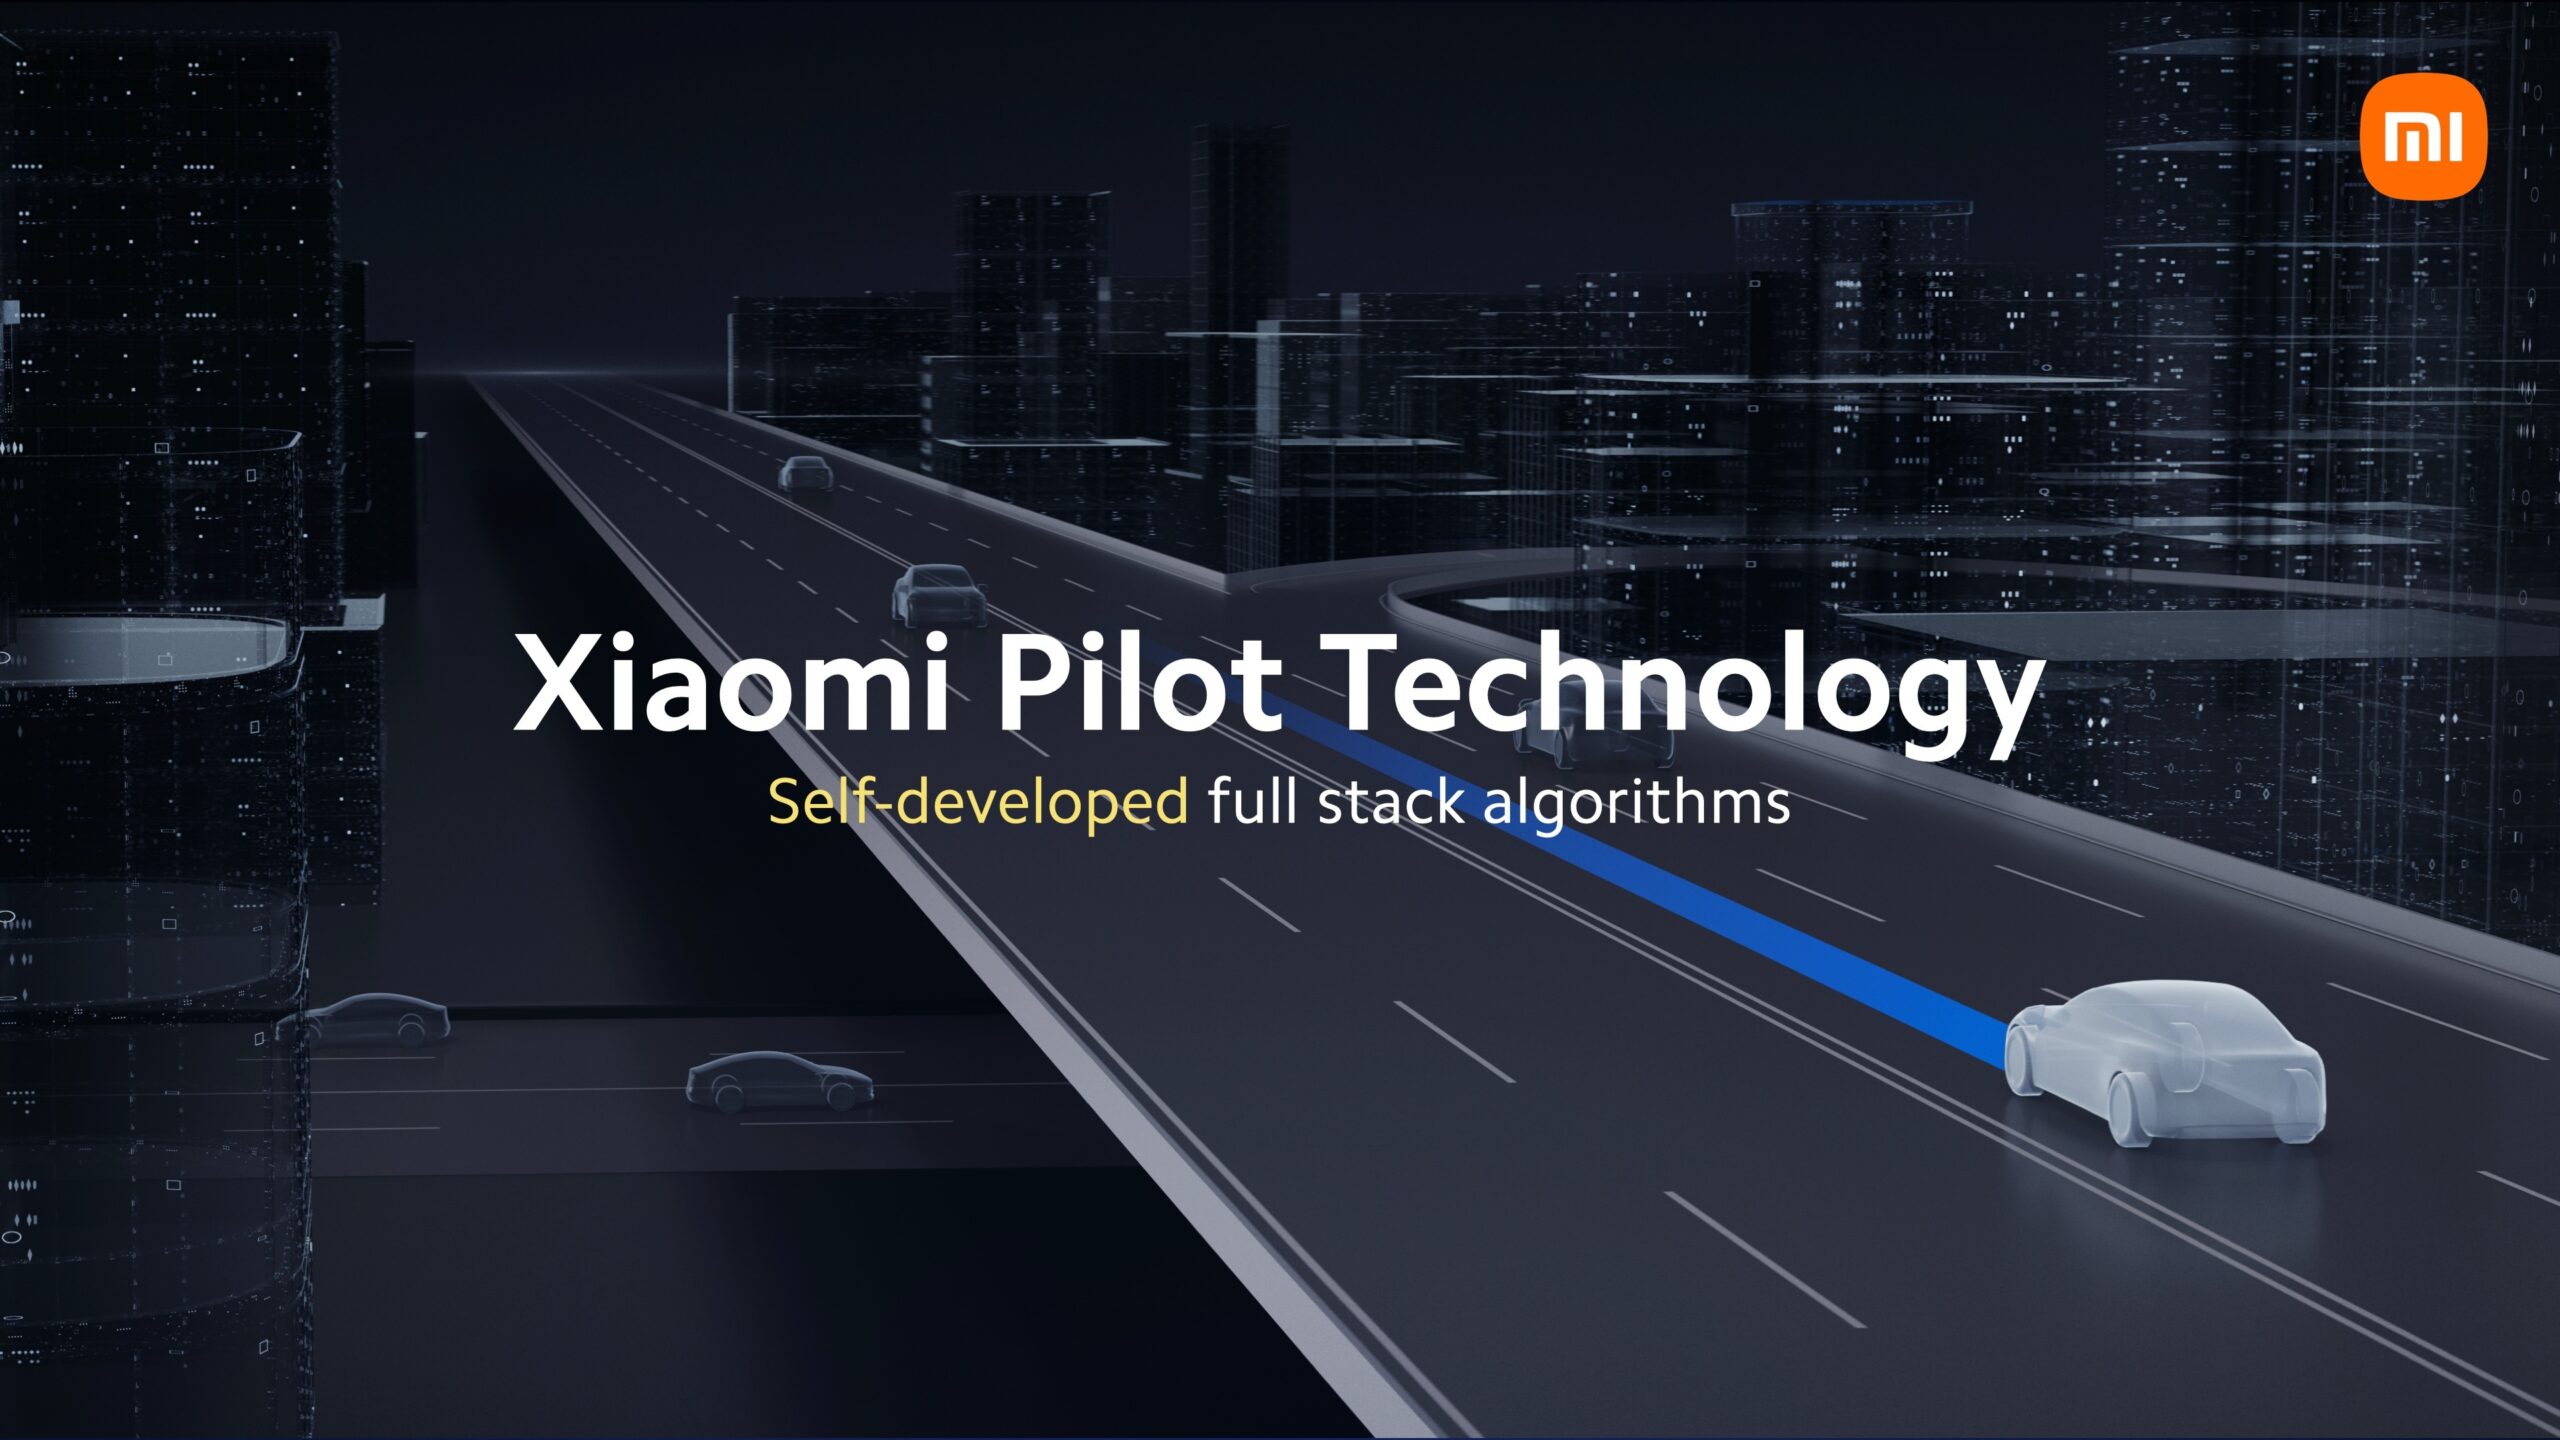 Xiaomi unveils their "Xiaomi Pilot Technology". - xiaomiui